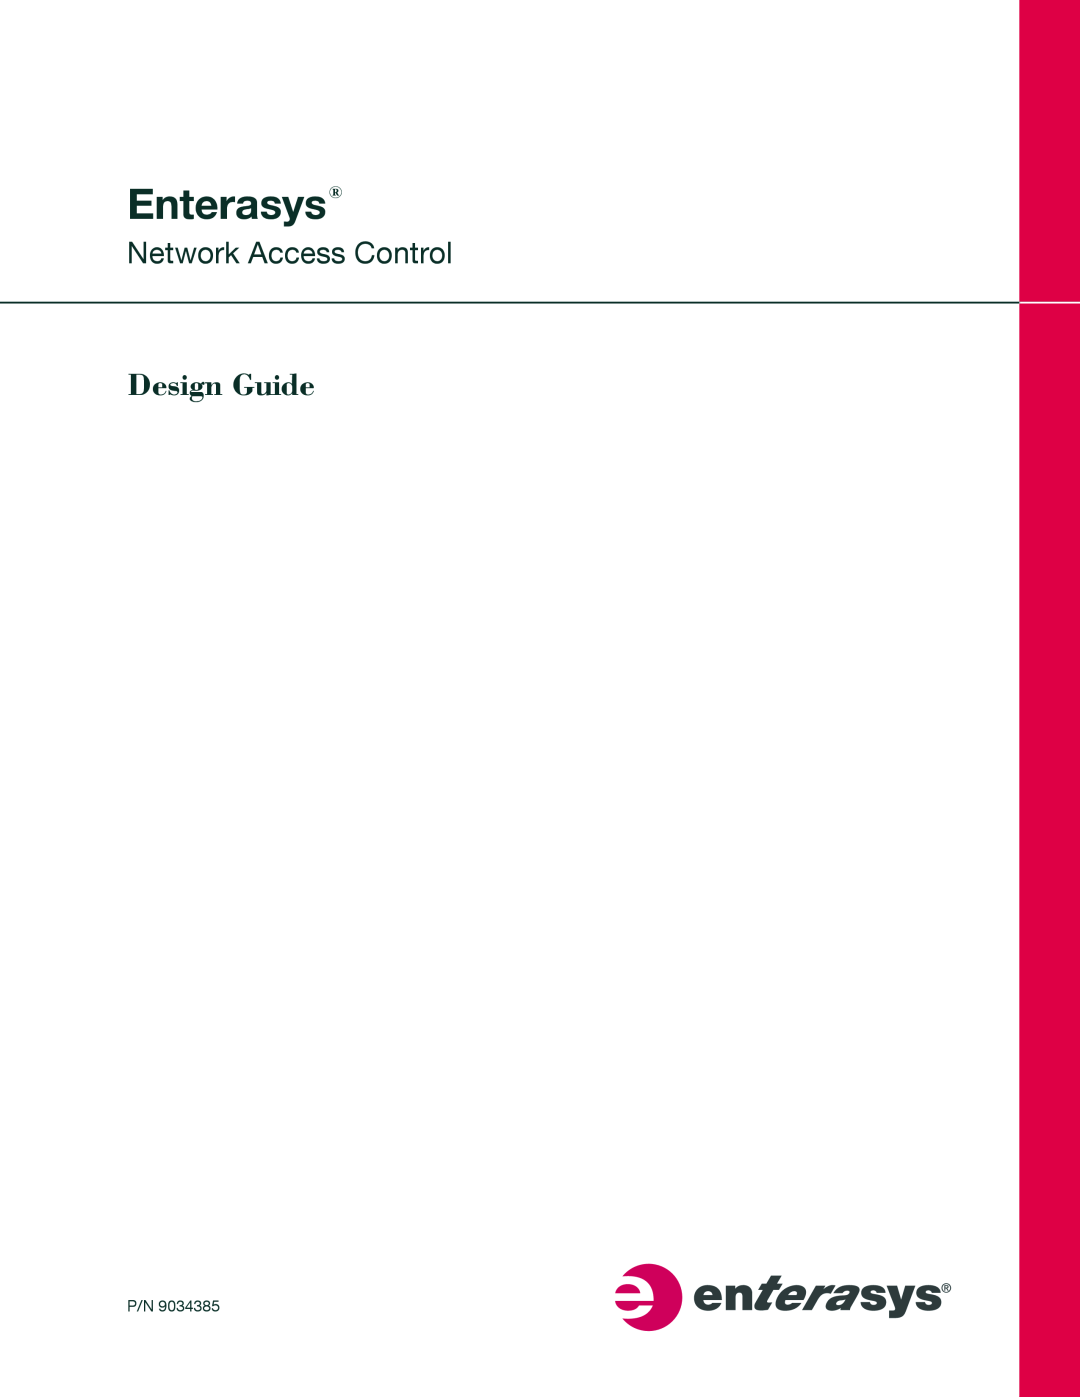 Enterasys Networks 9034385 manual Enterasys, Design Guide, Network Access Control 